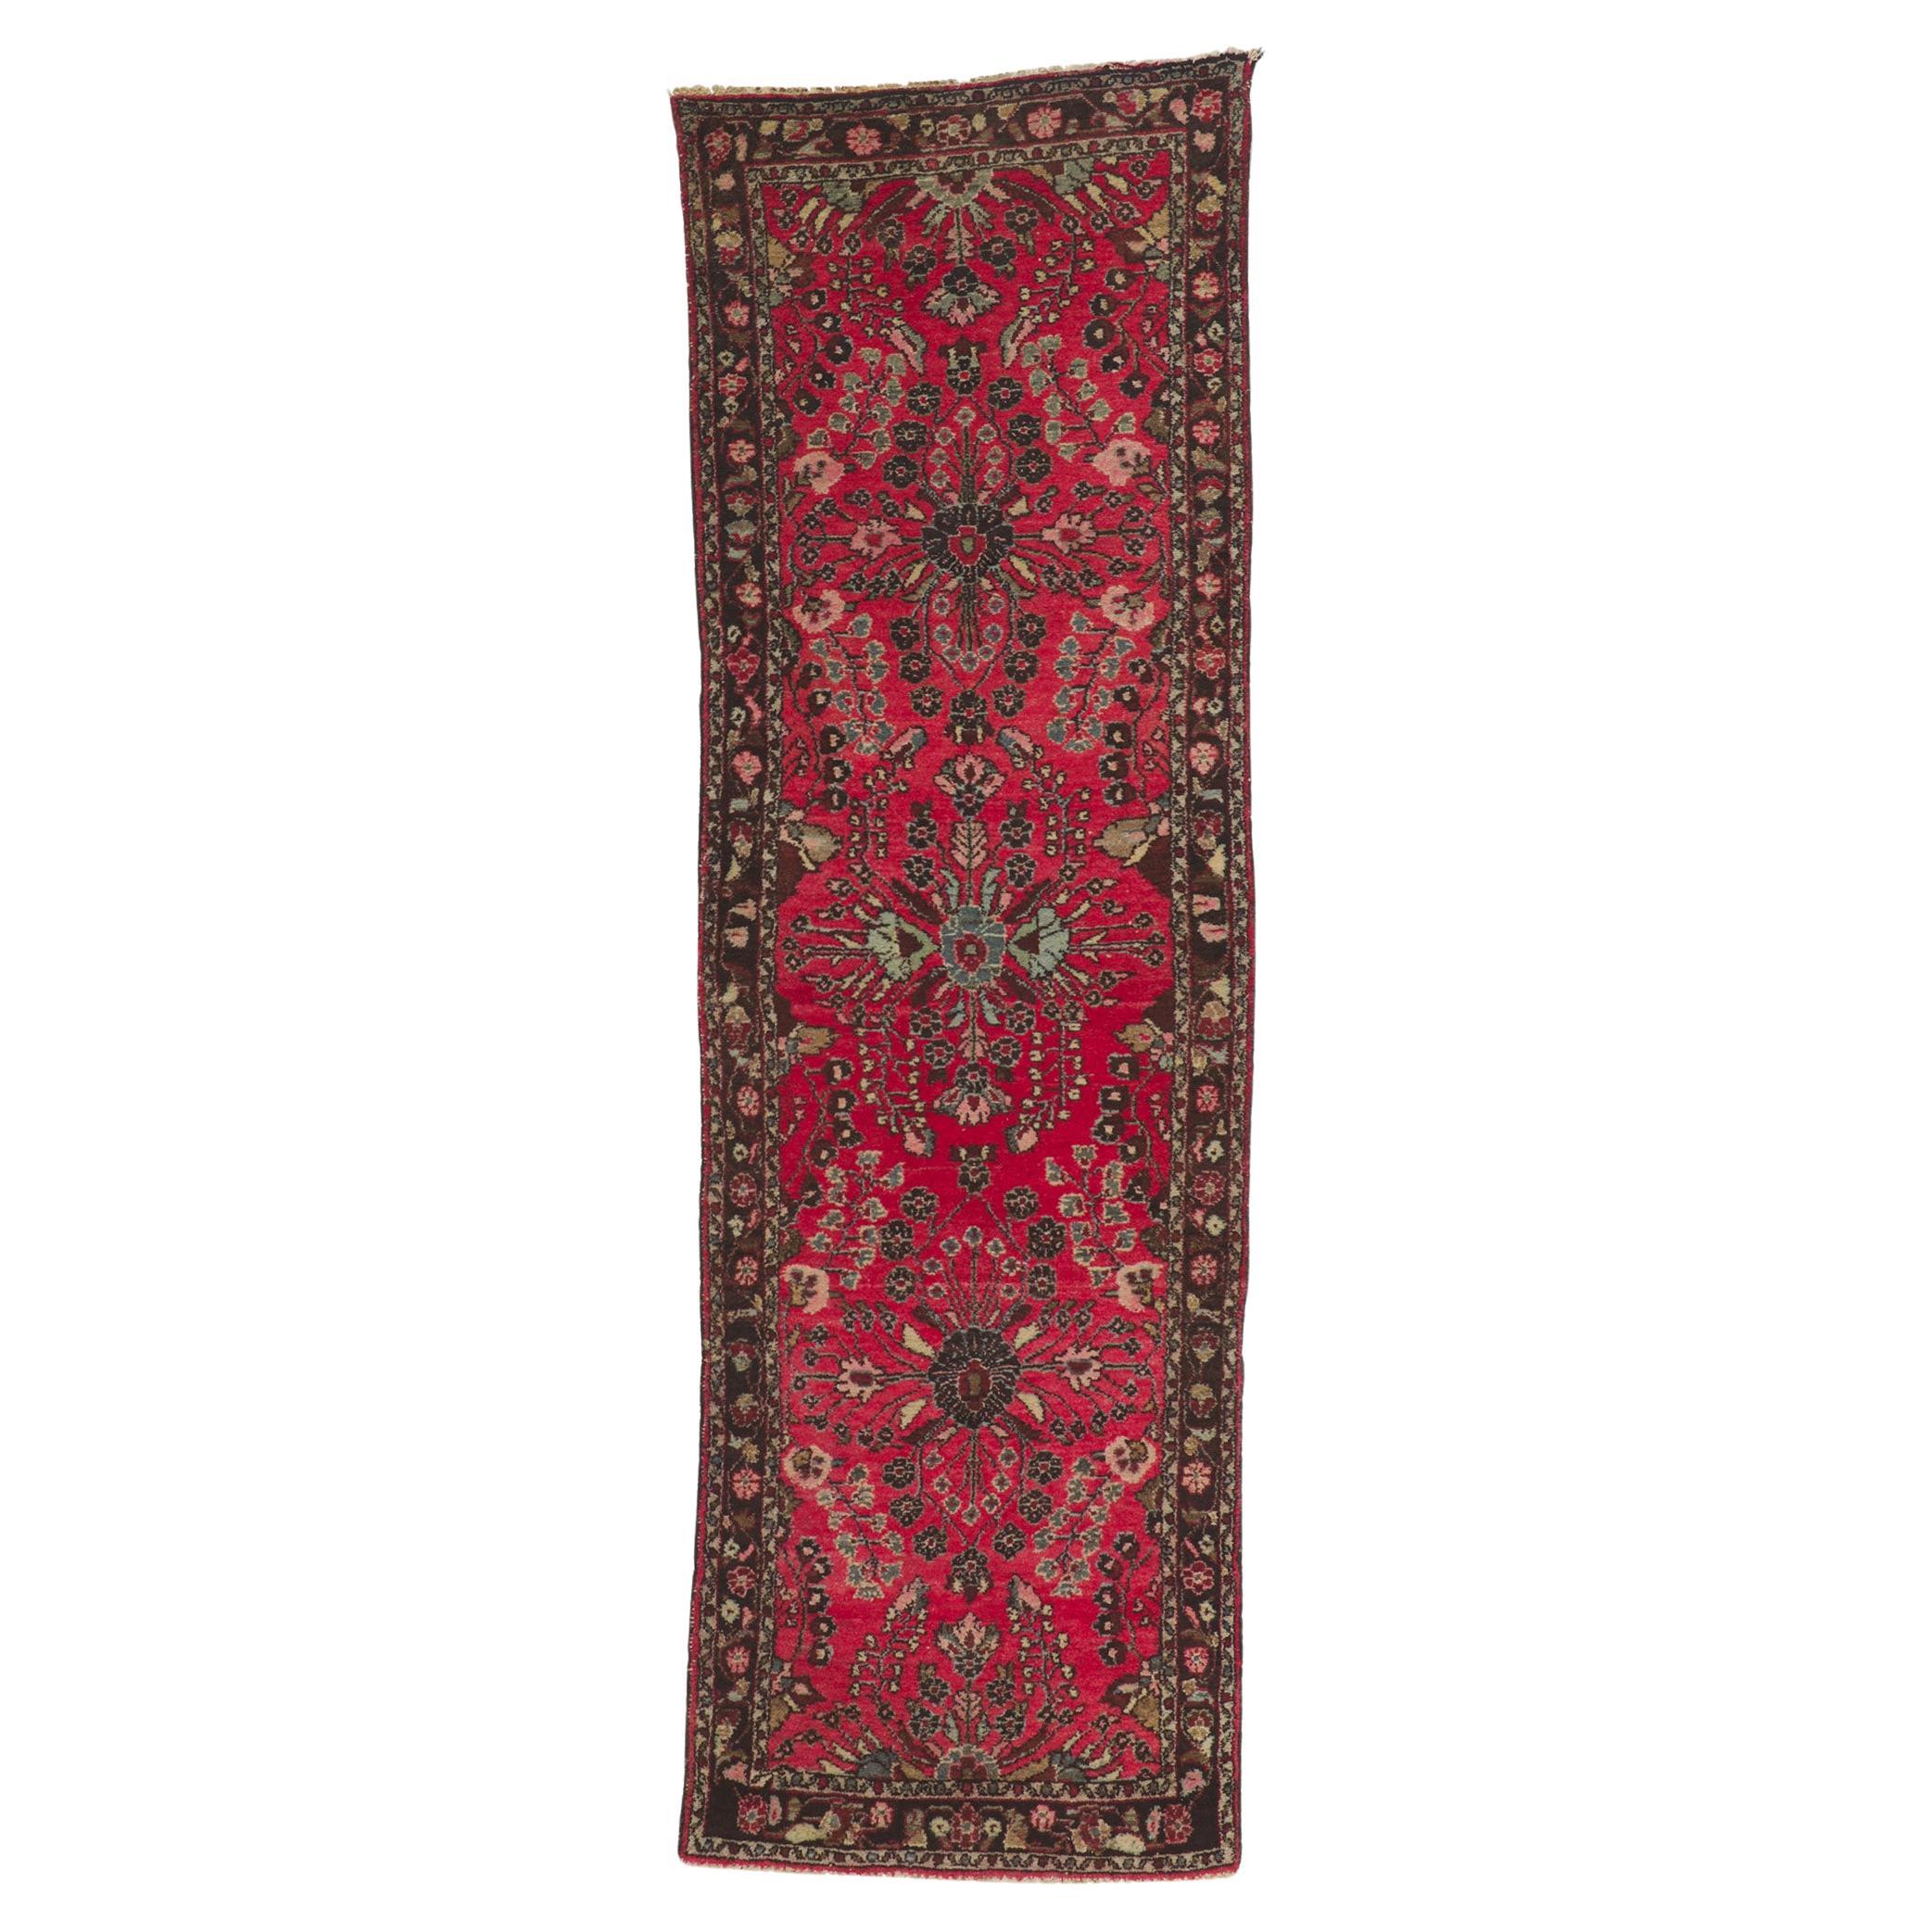 Antique Persian Lilihan Runner